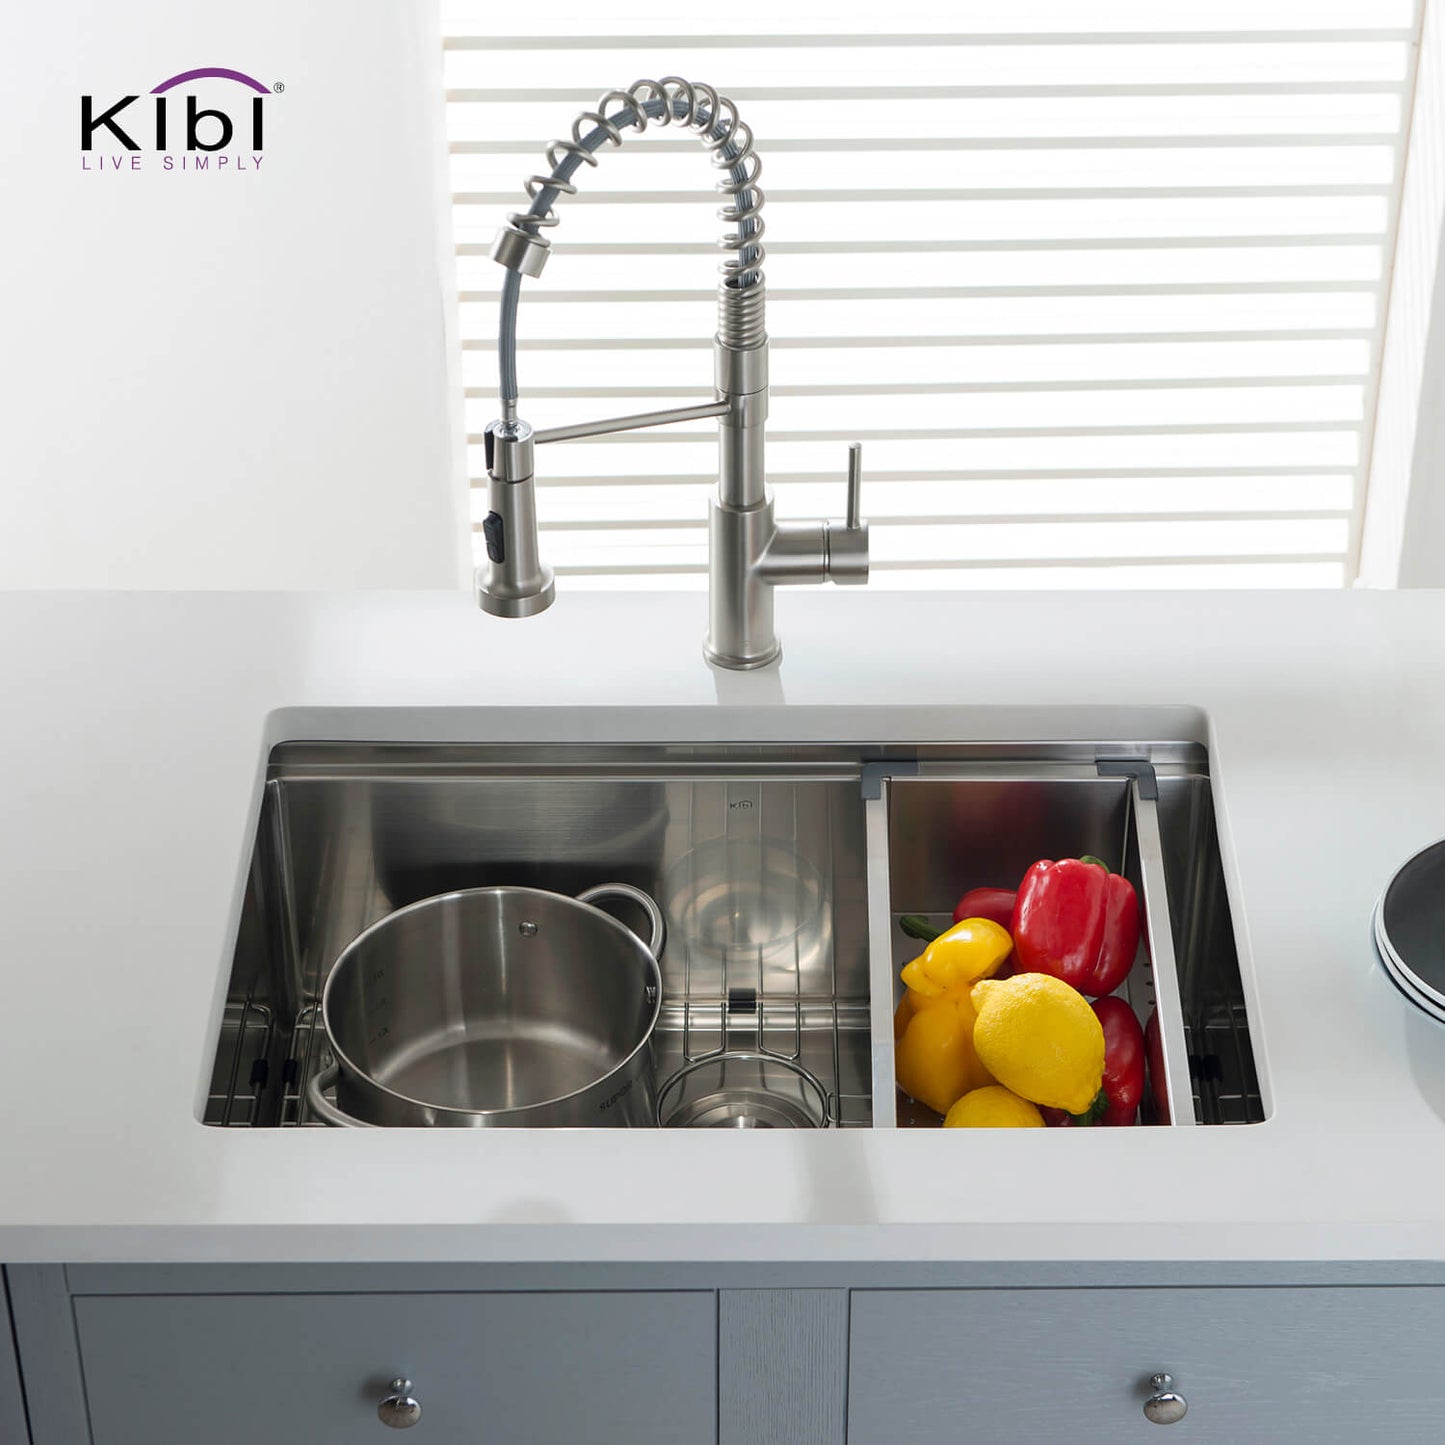 Kibi 28" x19" x 10" Single Bowl Undermount Workstation Sink In Satin Finish